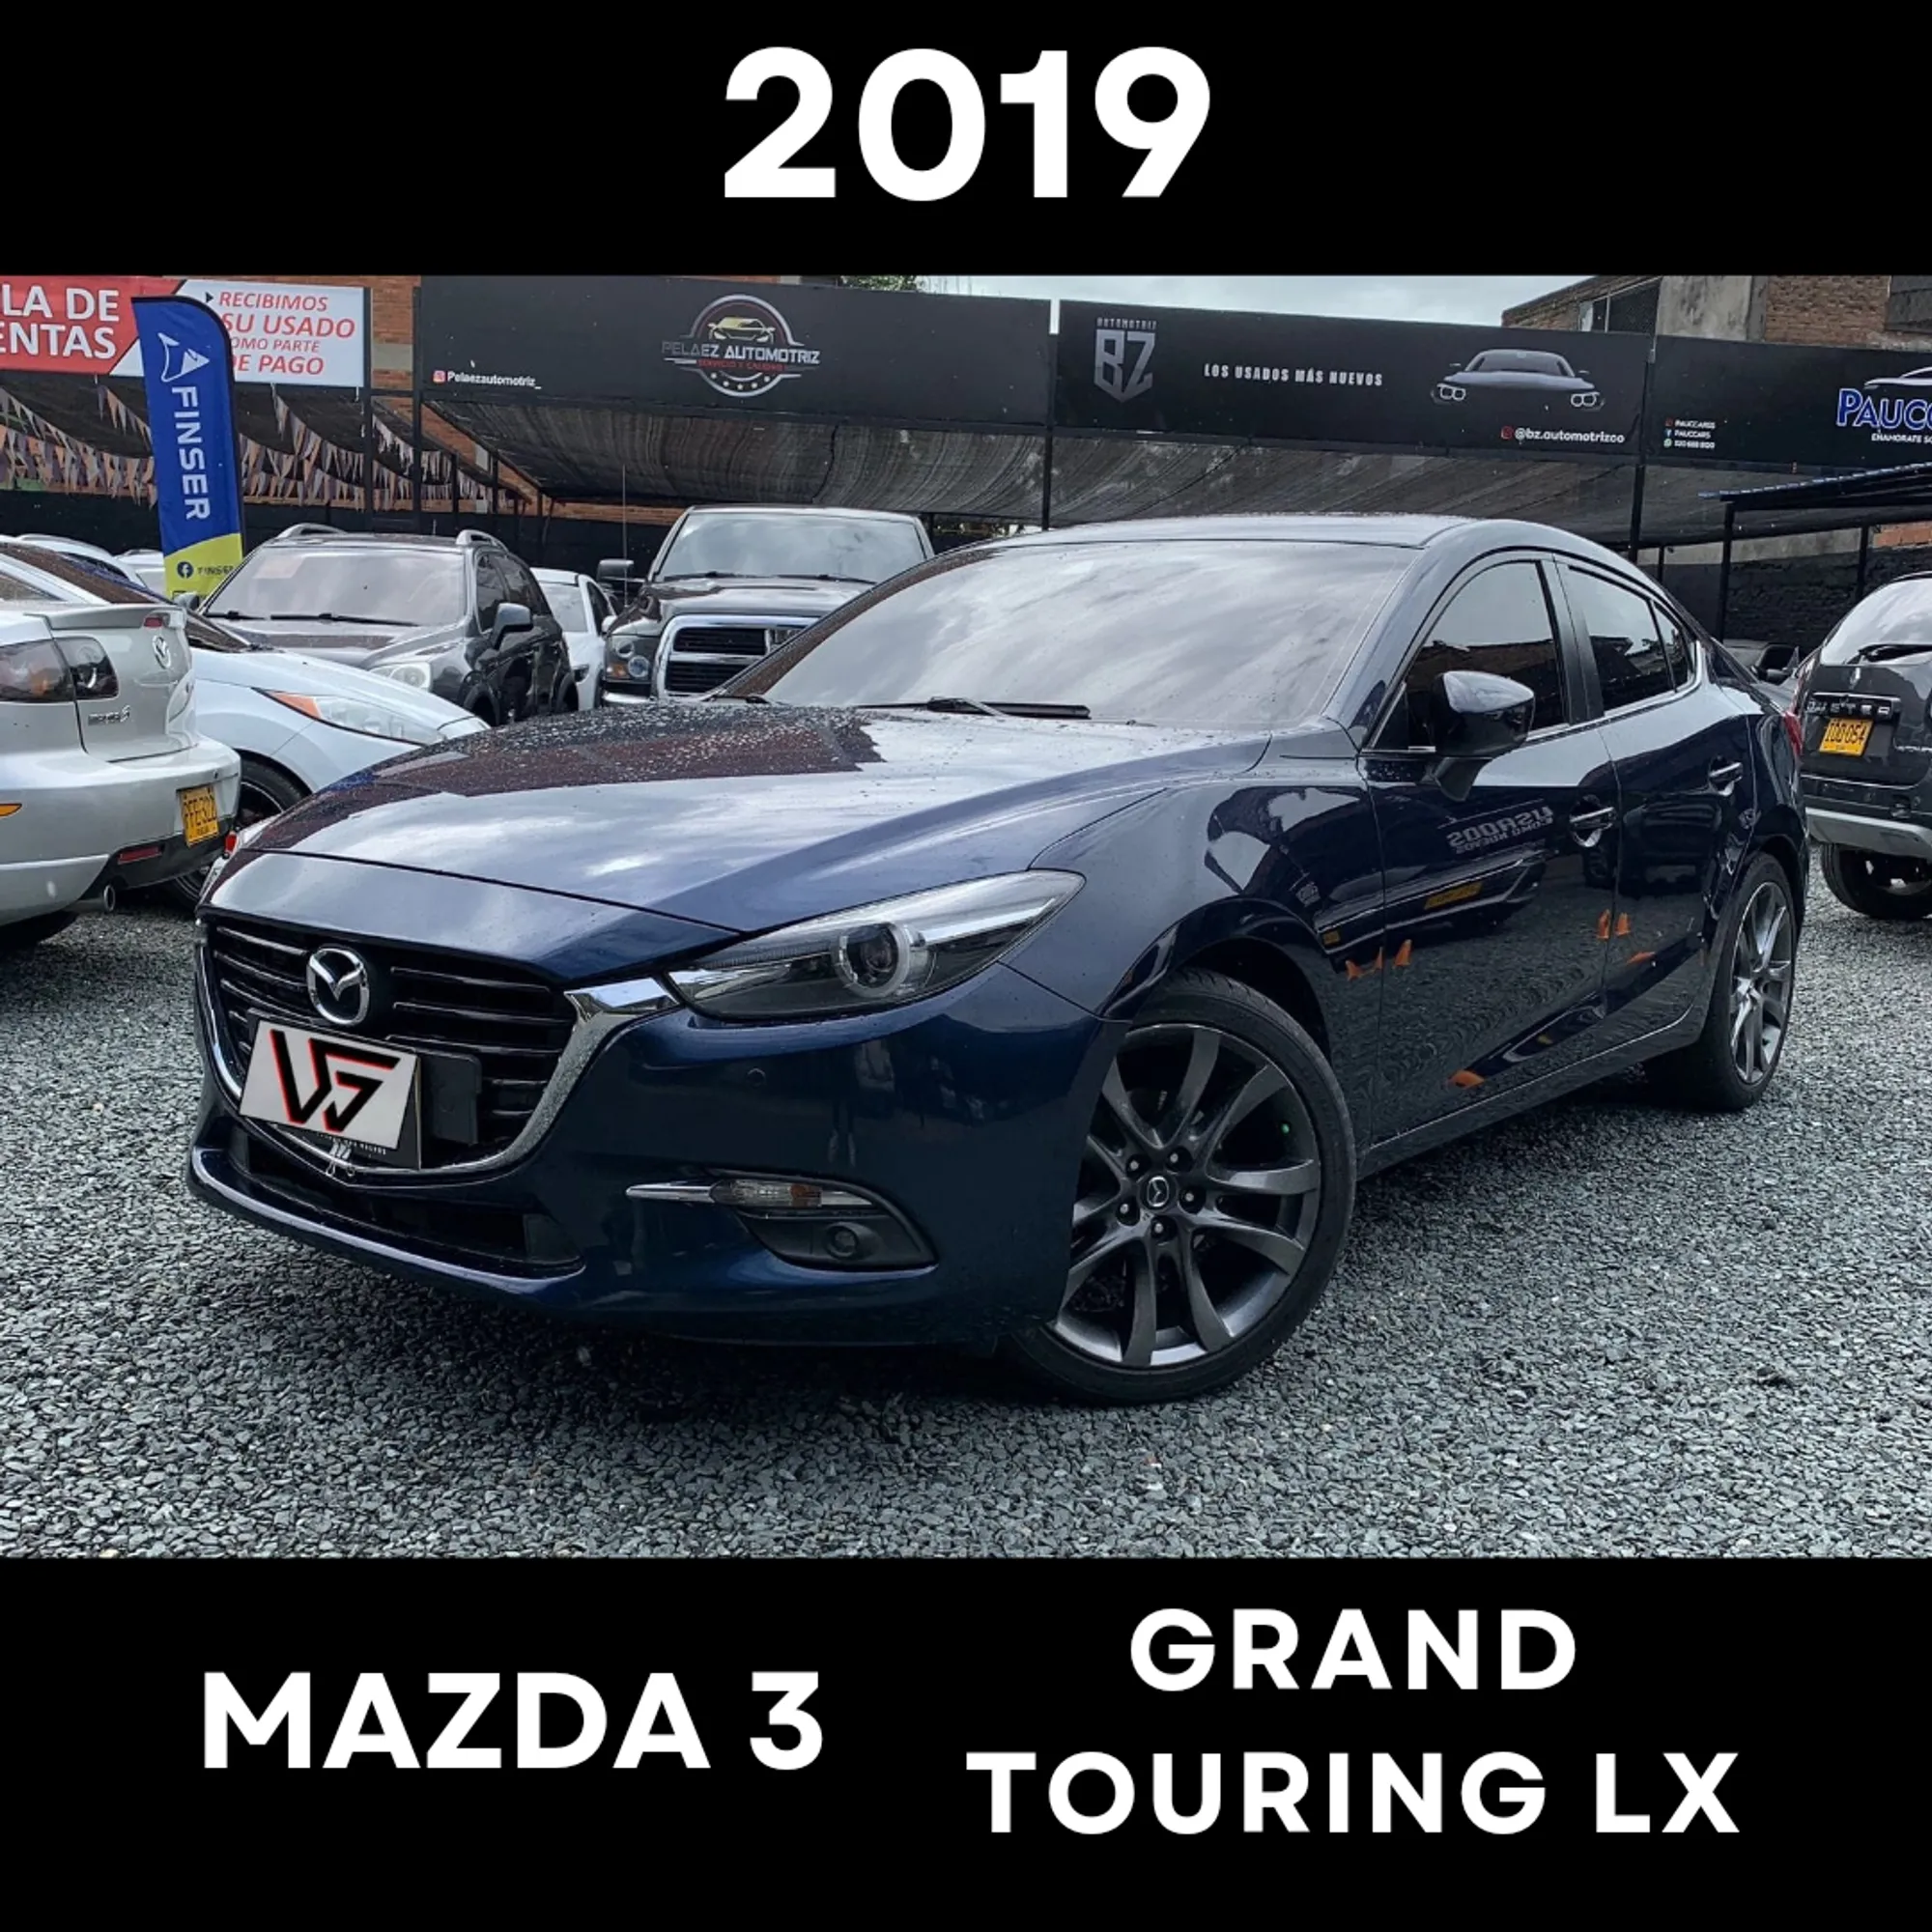 Mazda 3 Gran touring LX 2019 full